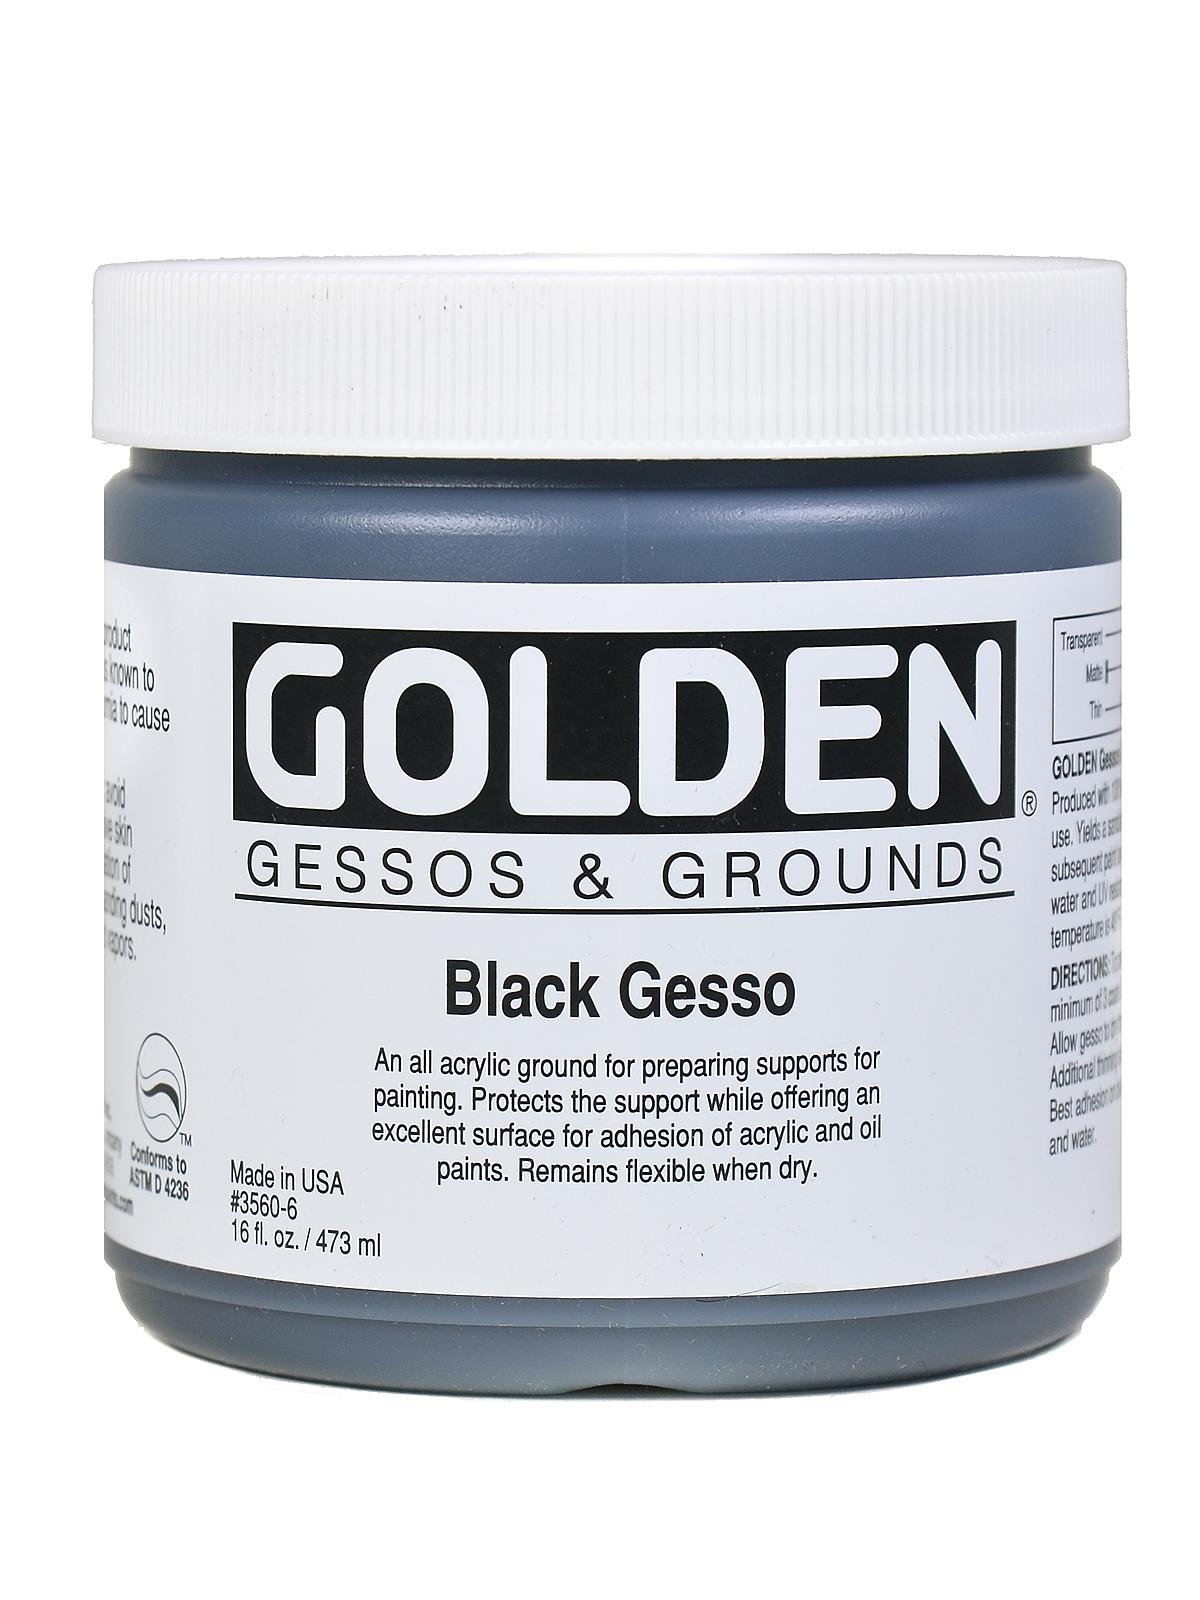 Golden Acrylic Black Gesso Primer 473ml